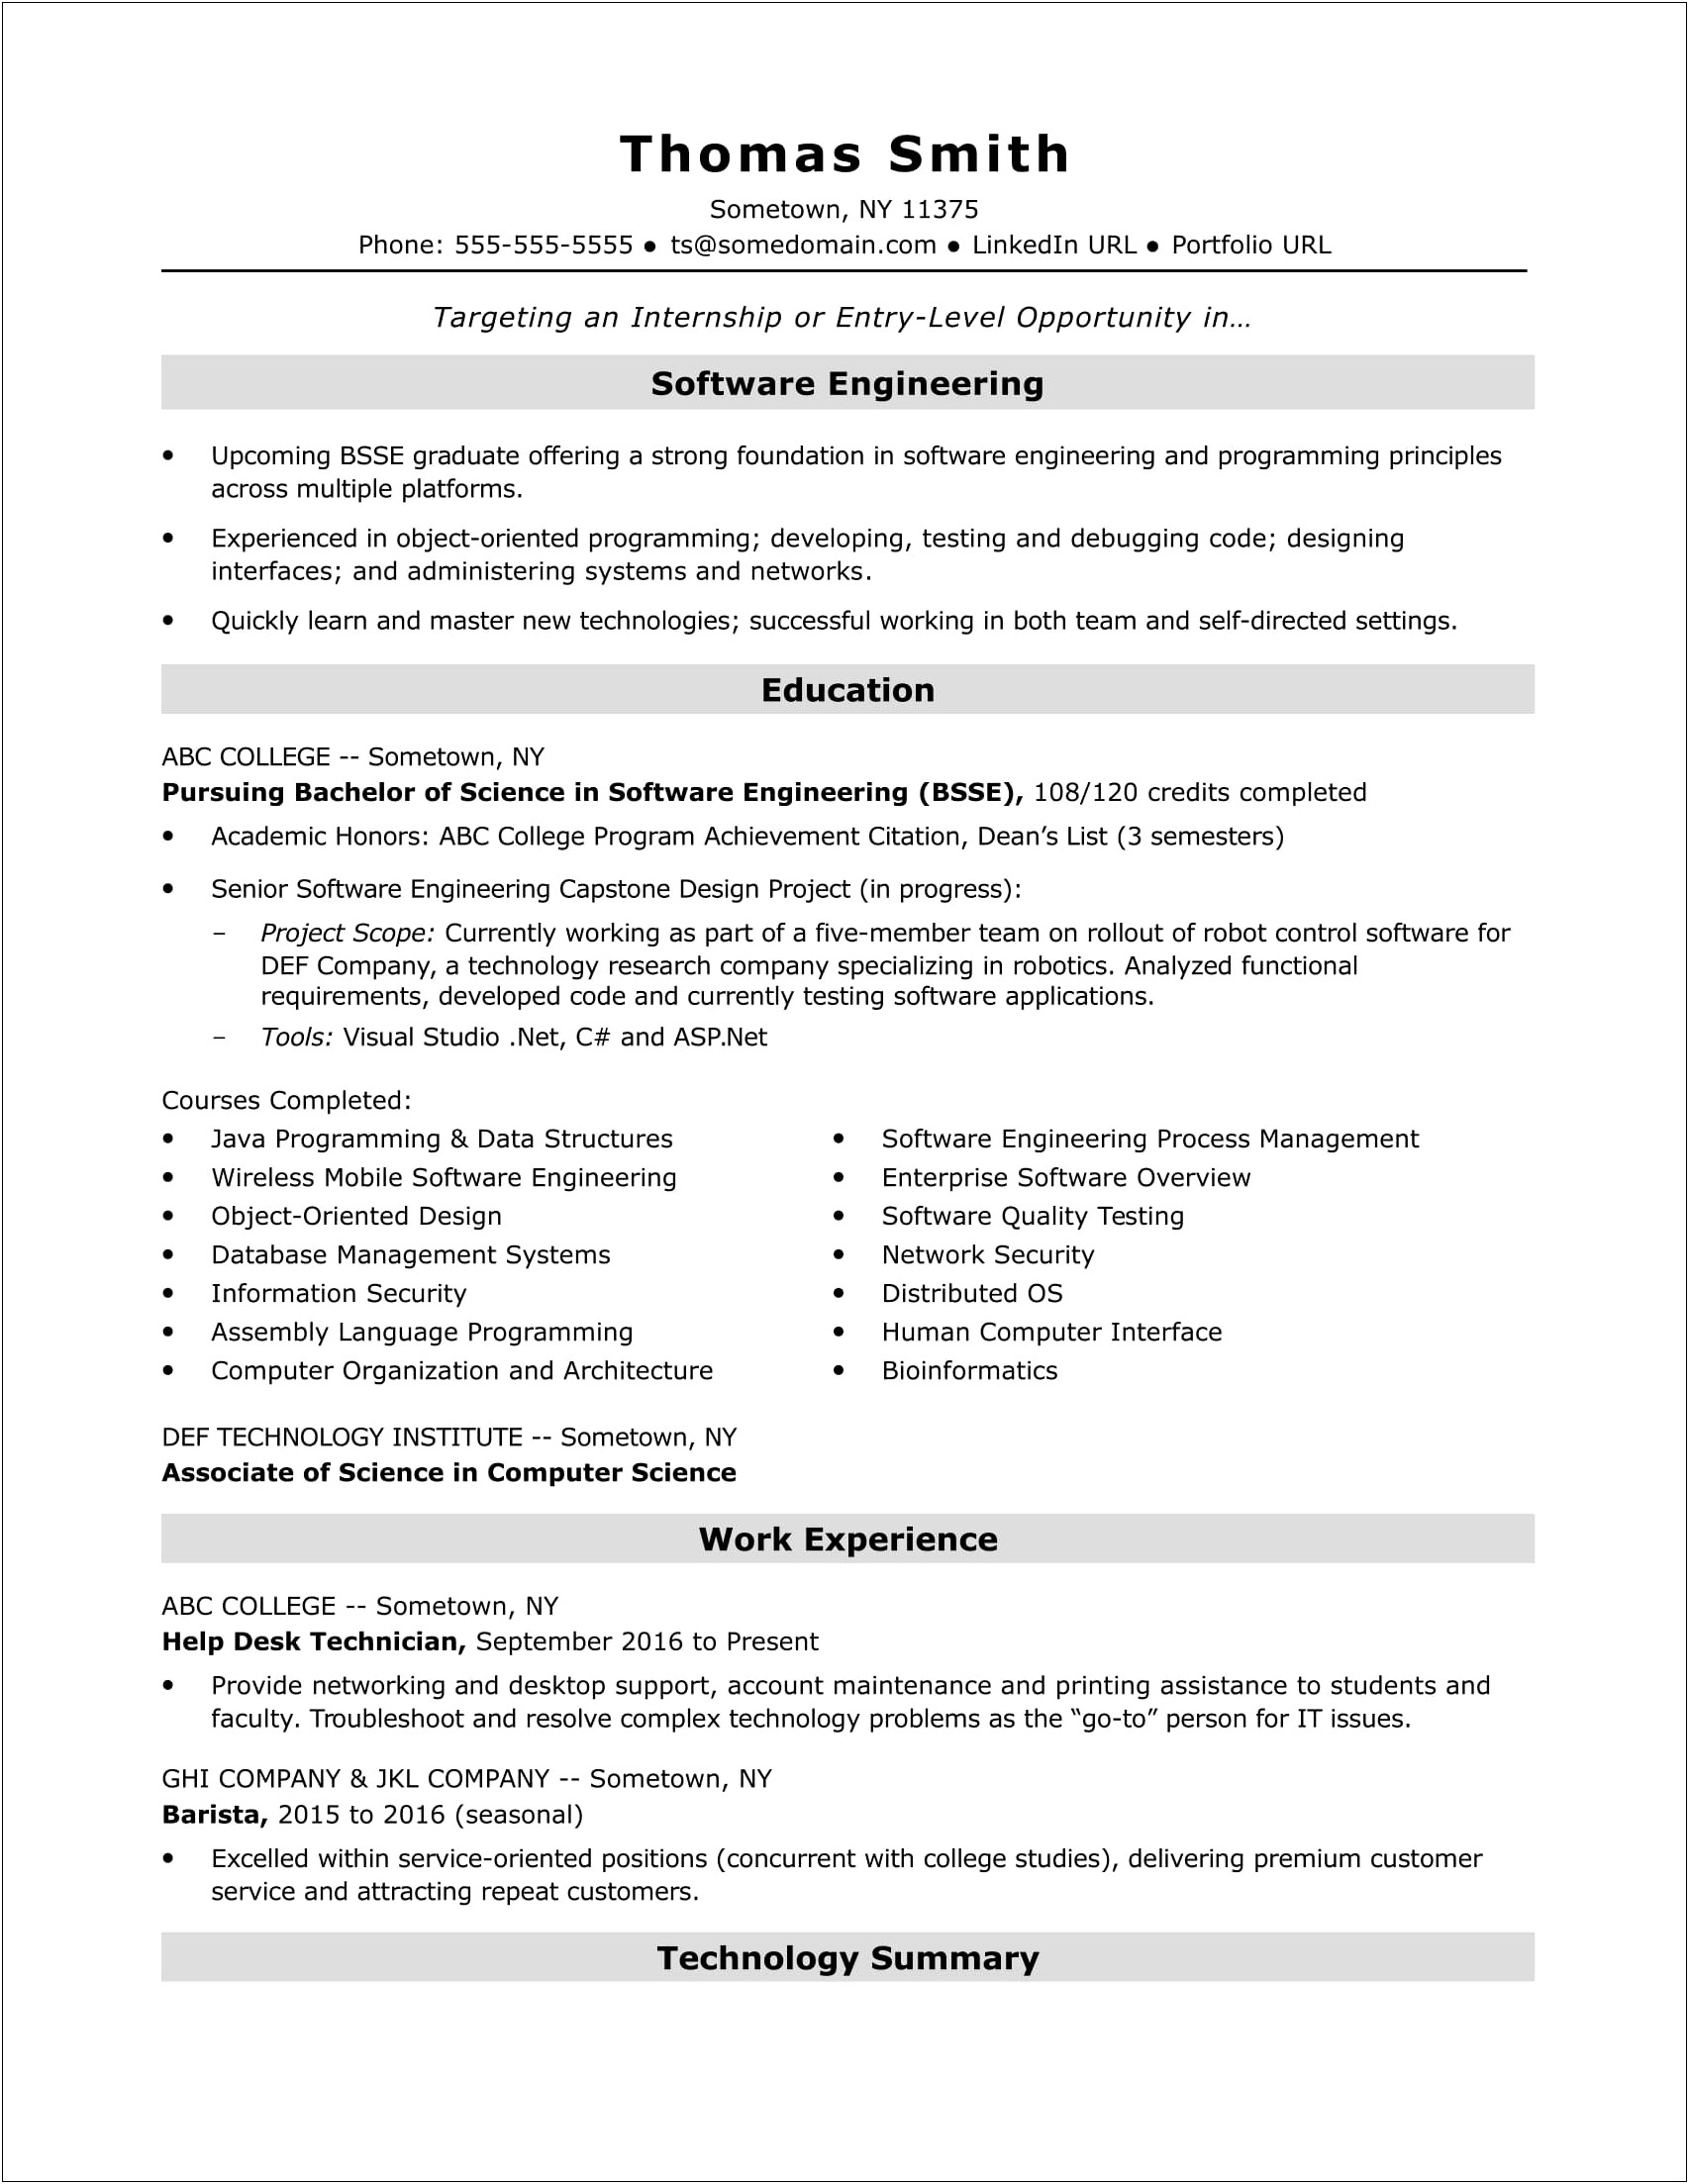 Resume Format For Entry Level Jobs